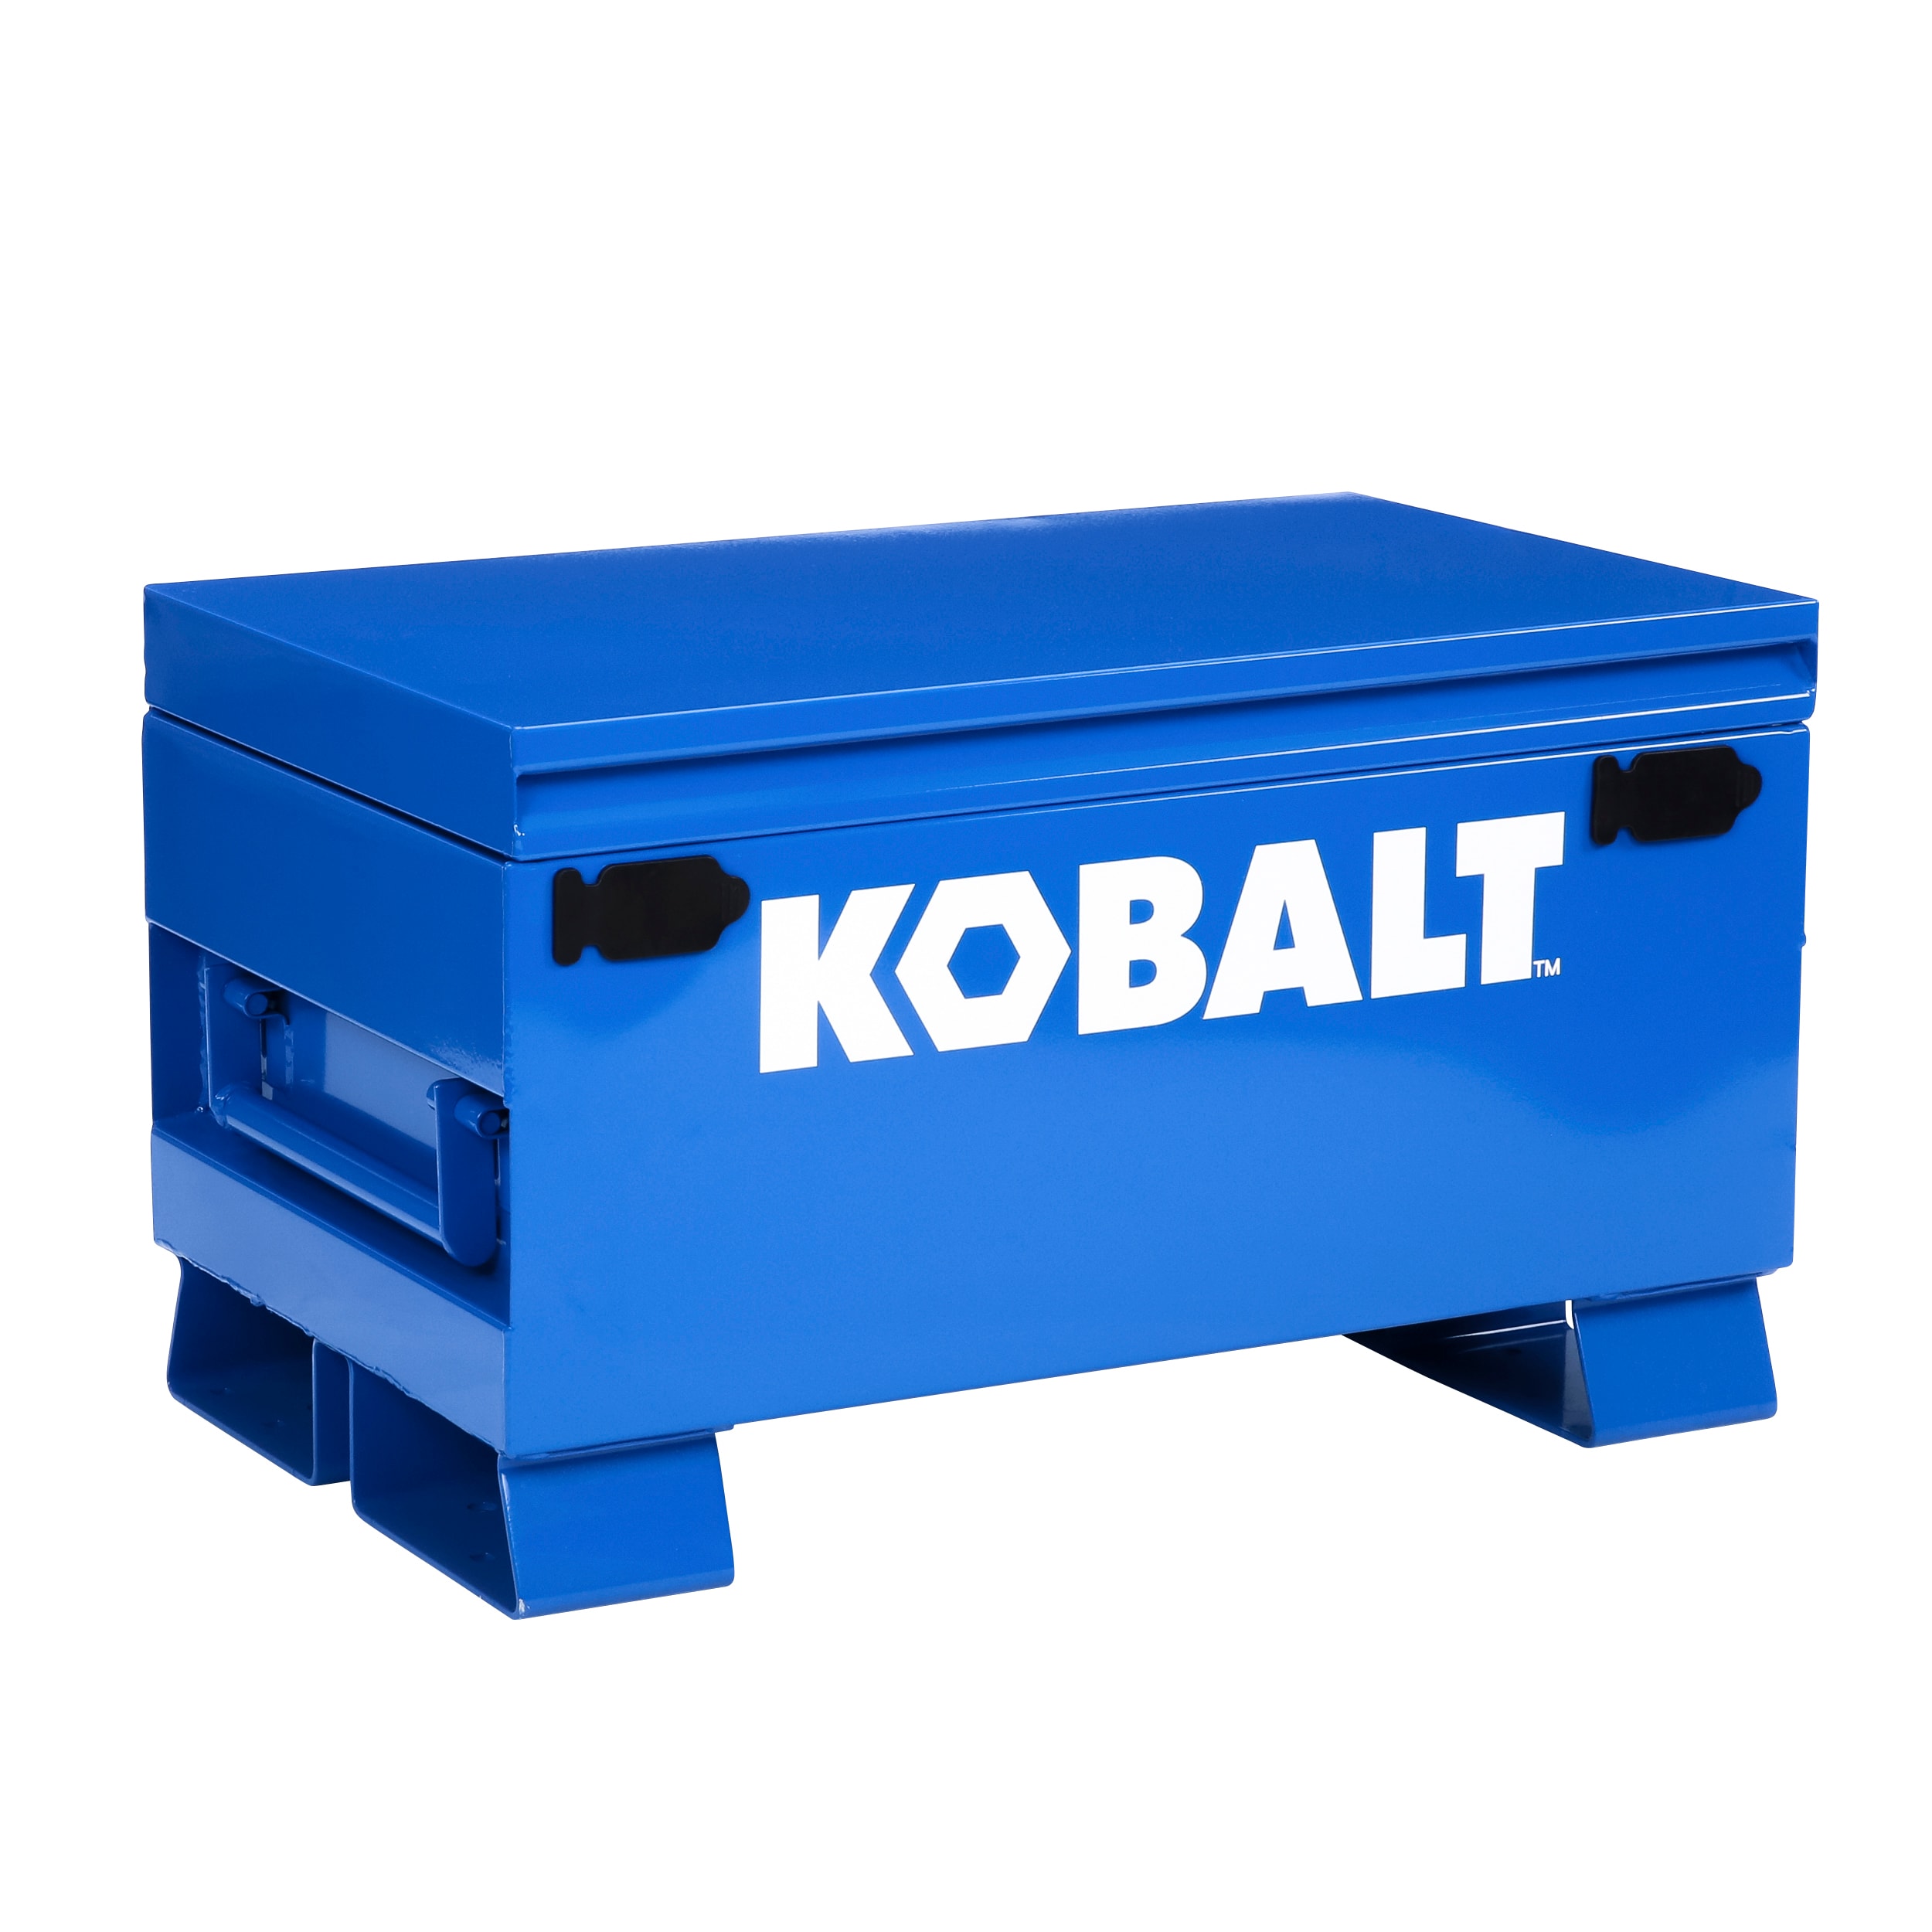 Kobalt 19-in W x 32-in L x 18-in H Blue Steel Jobsite Box in the